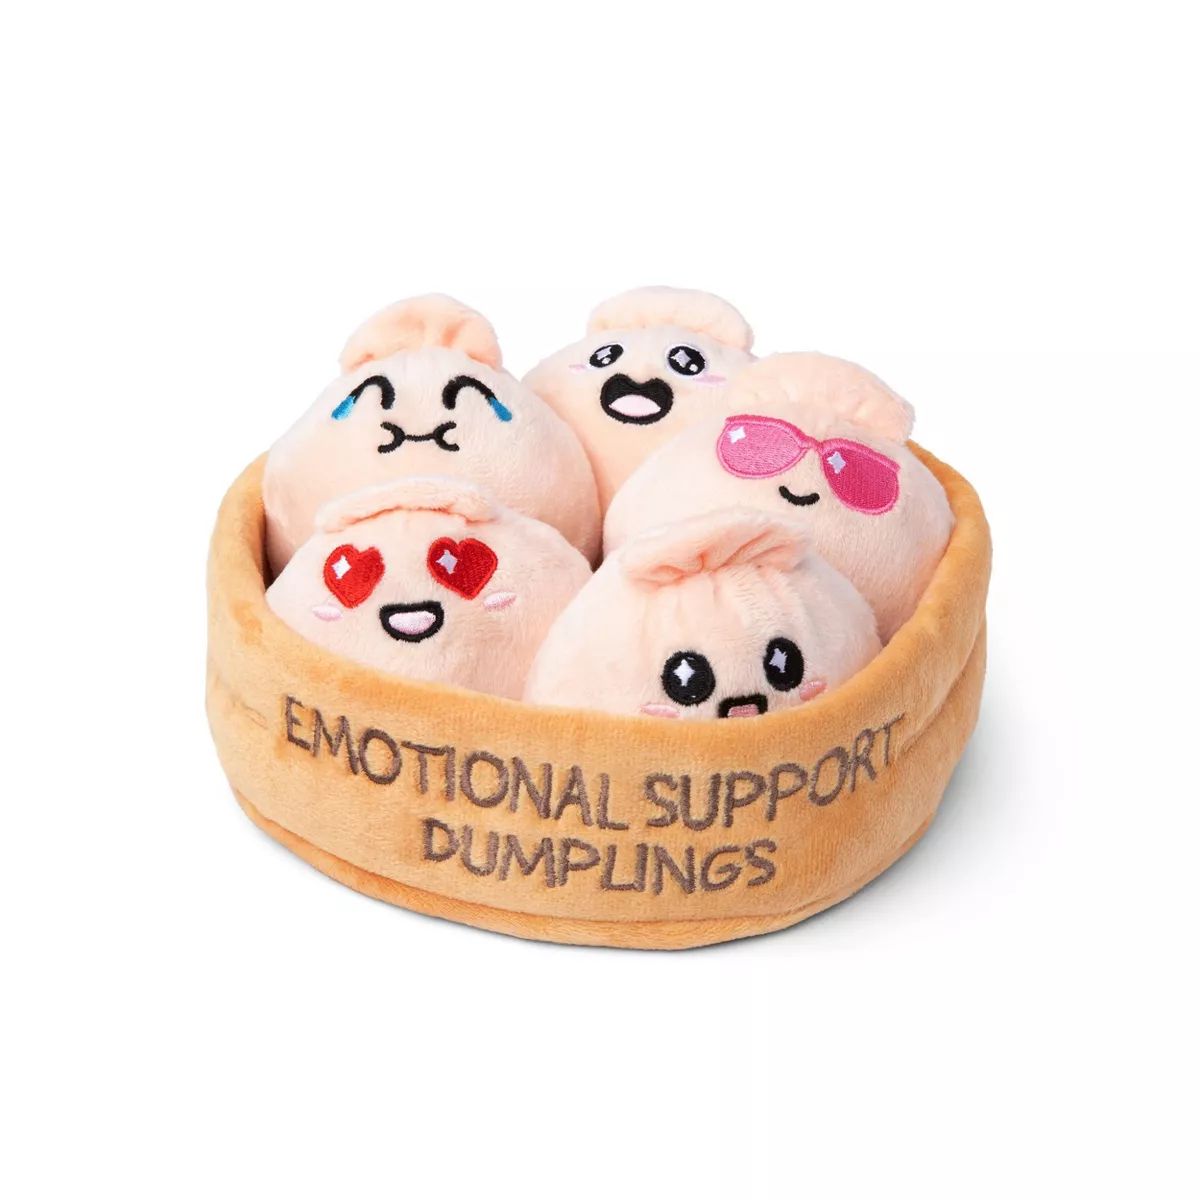 What Do You Meme? Emotional Support Dumplings Game | Target